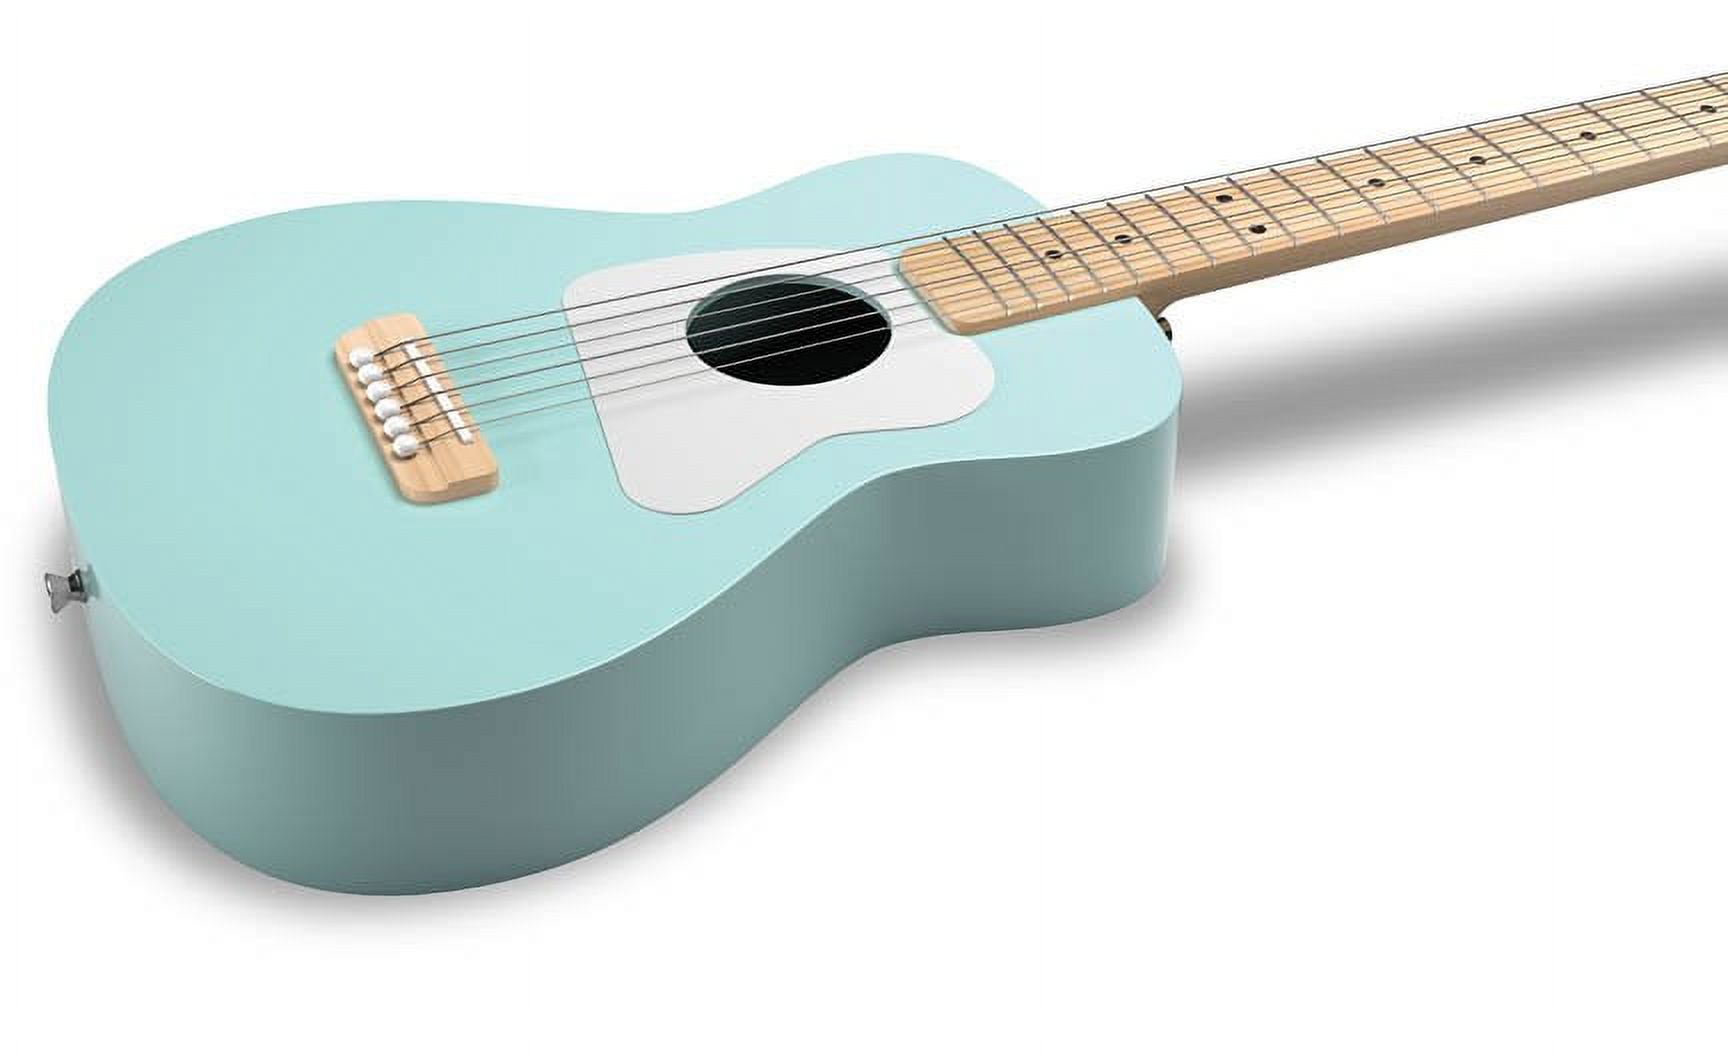 Loog Instruments 329019 Pro VI 6 String Acoustic Guitar, Green - image 2 of 3